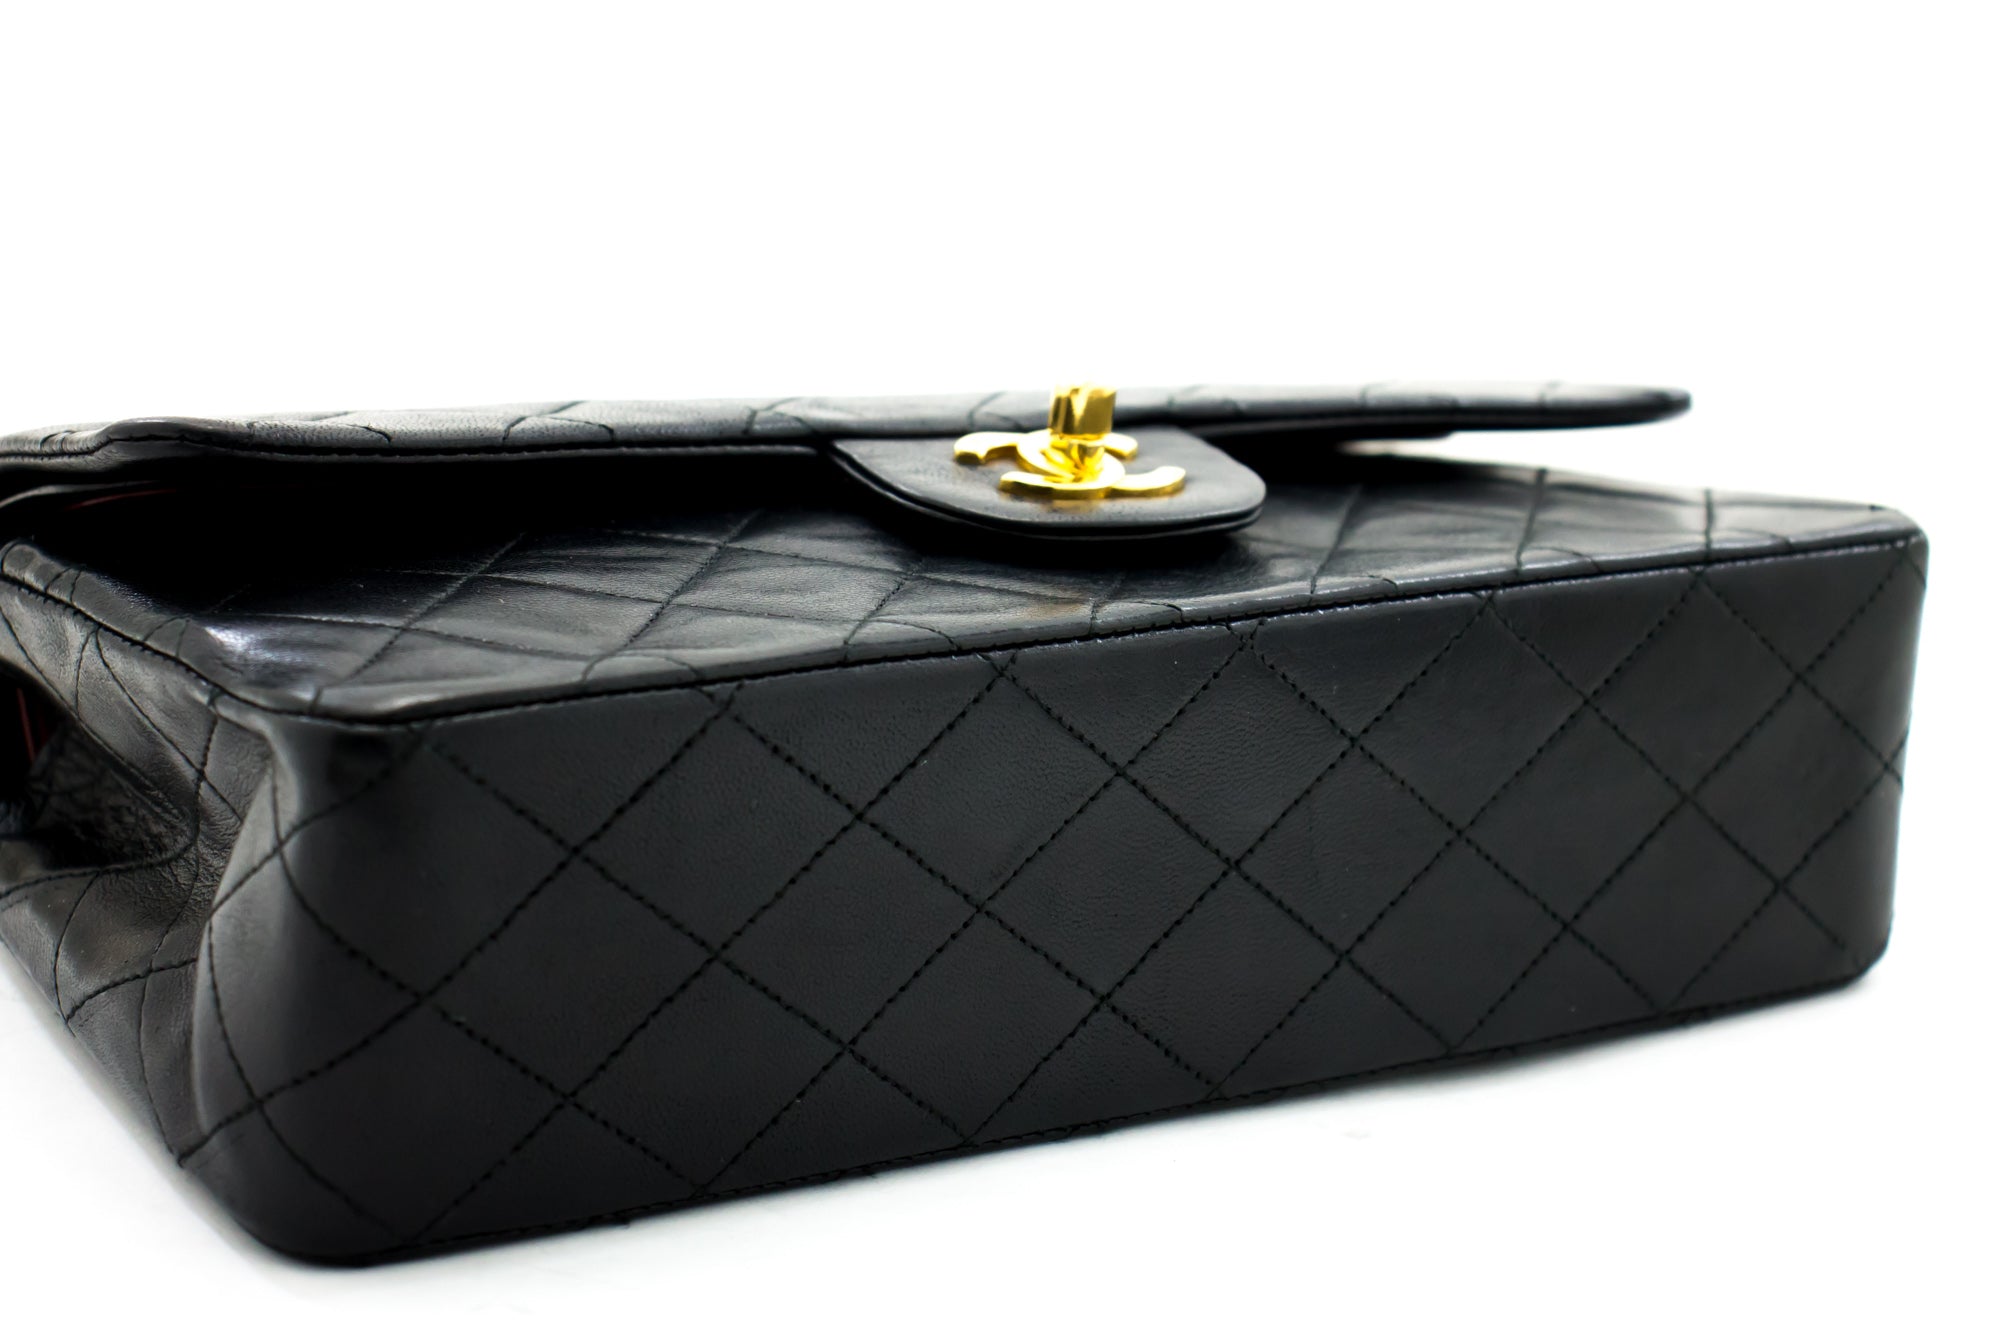 CHANEL 2.55 Double Flap 10 Chain Shoulder Bag Black Lambskin i45 – hannari- shop